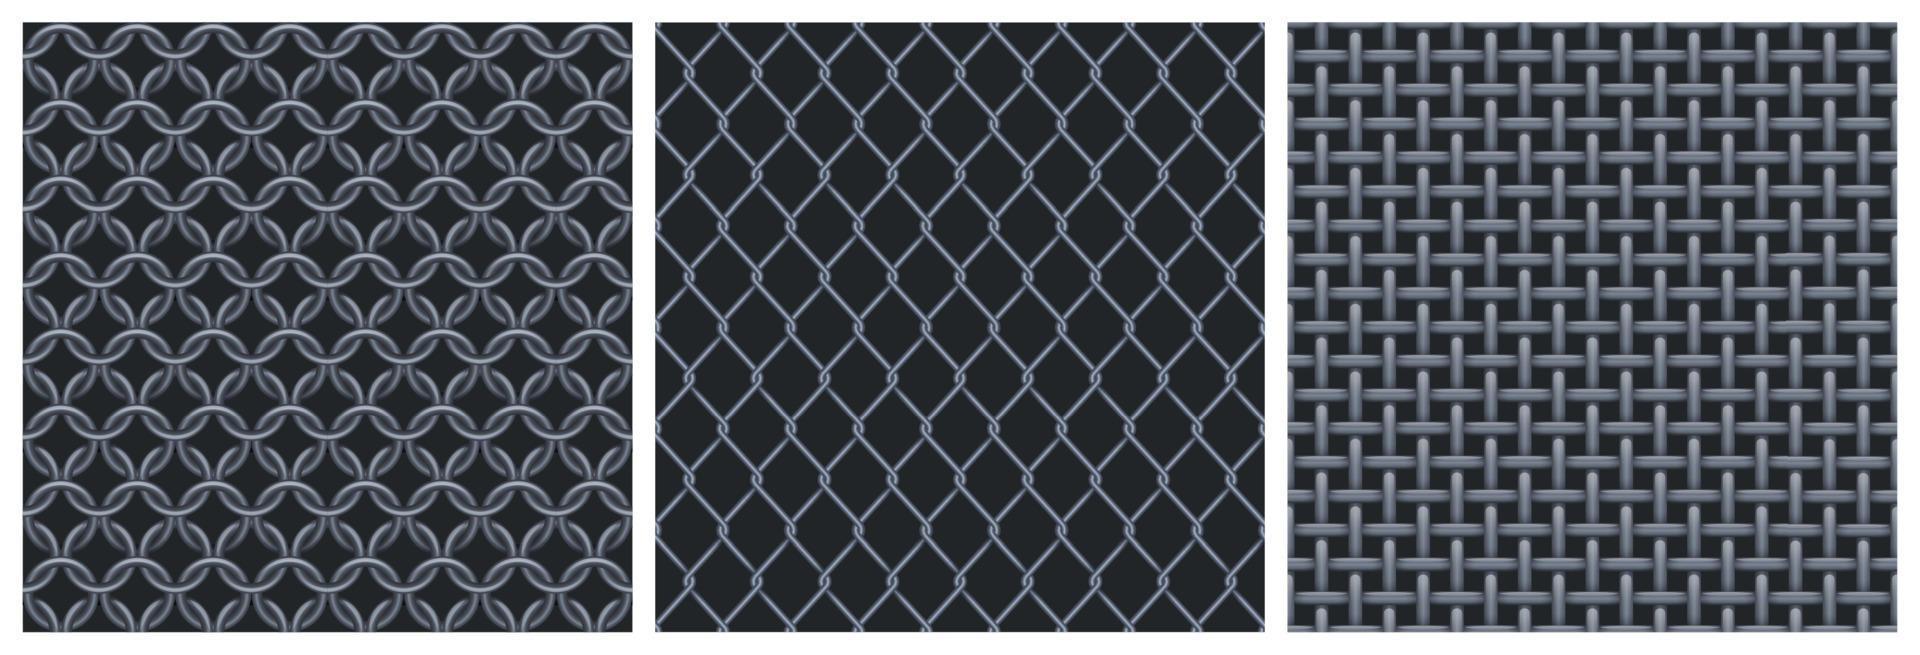 Metal net, steel mesh texture seamless patterns vector